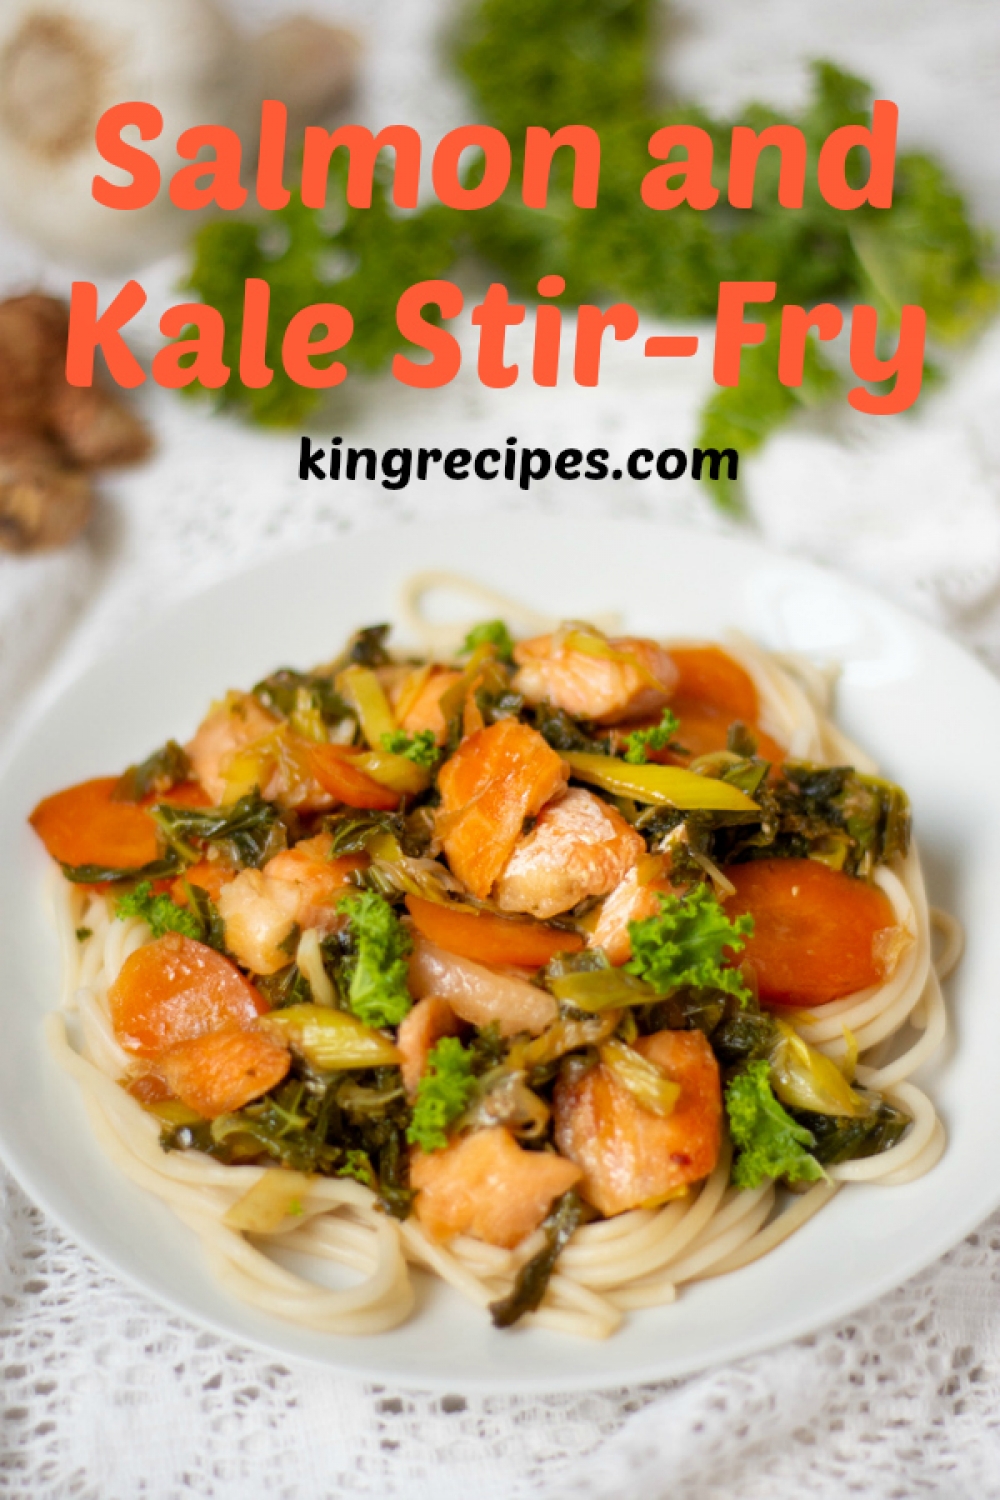 Salmon and Kale Stir-Fry